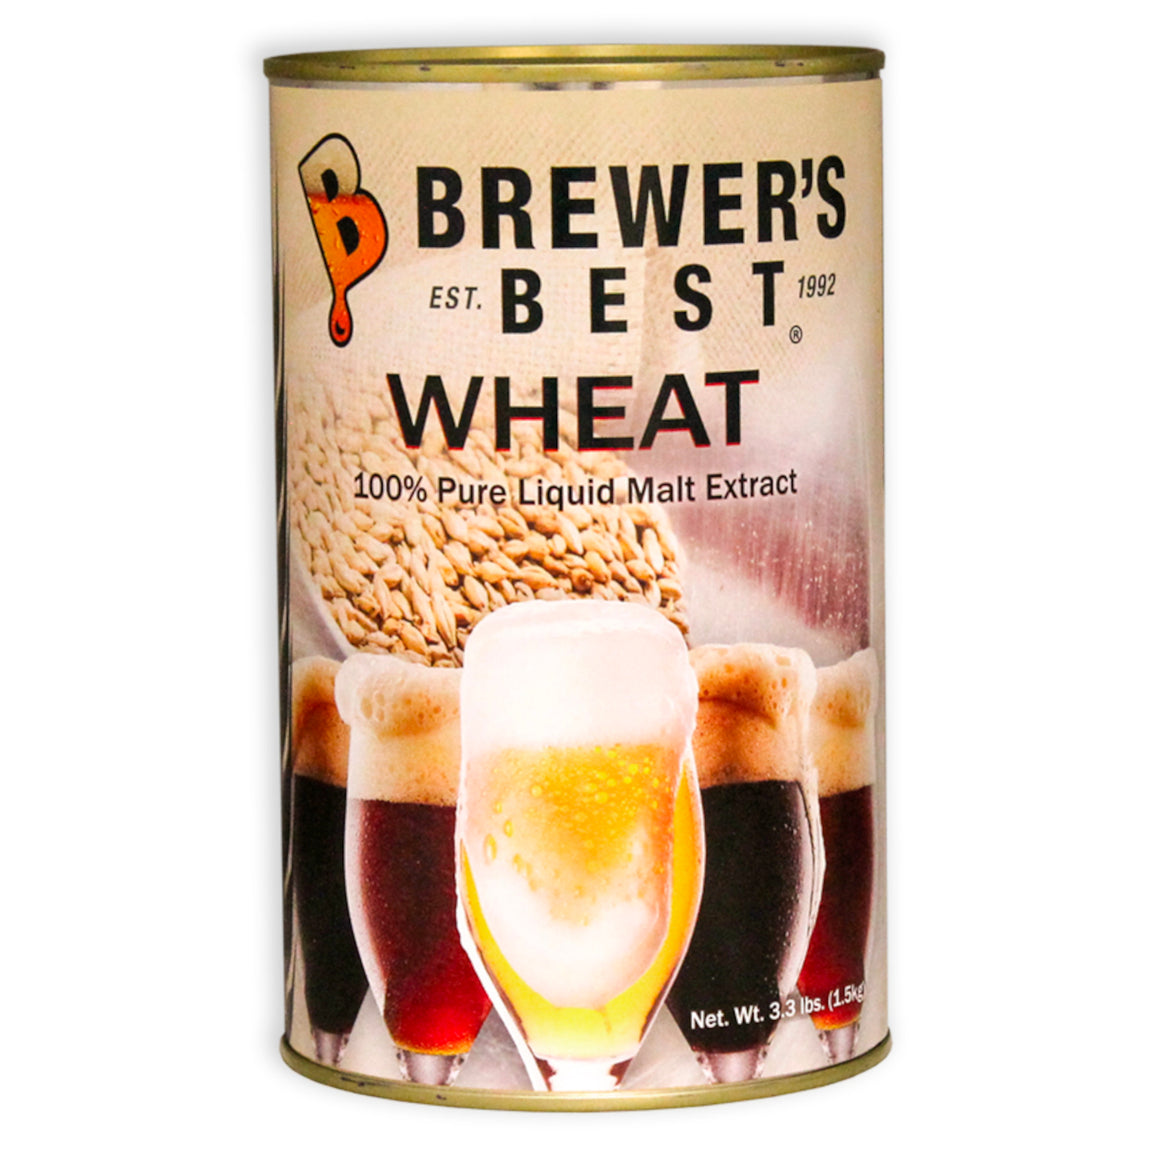 Brewer's Best Wheat Malt Extract, 3.3lb